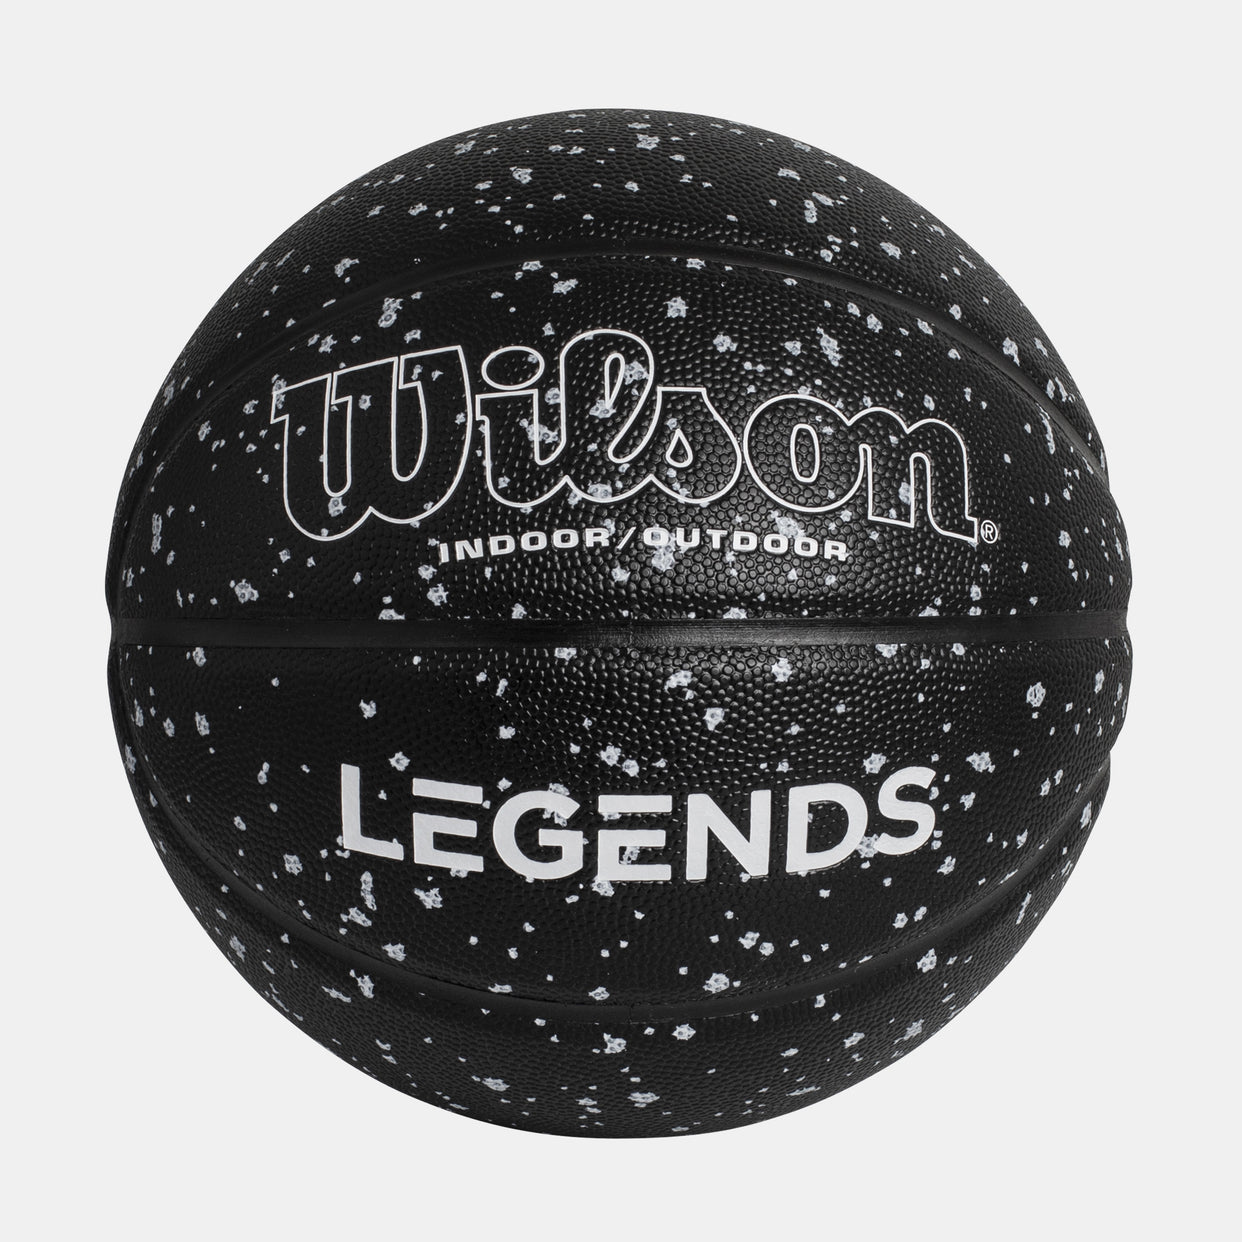 Wilson x Legends Basketball Infinity Splatter